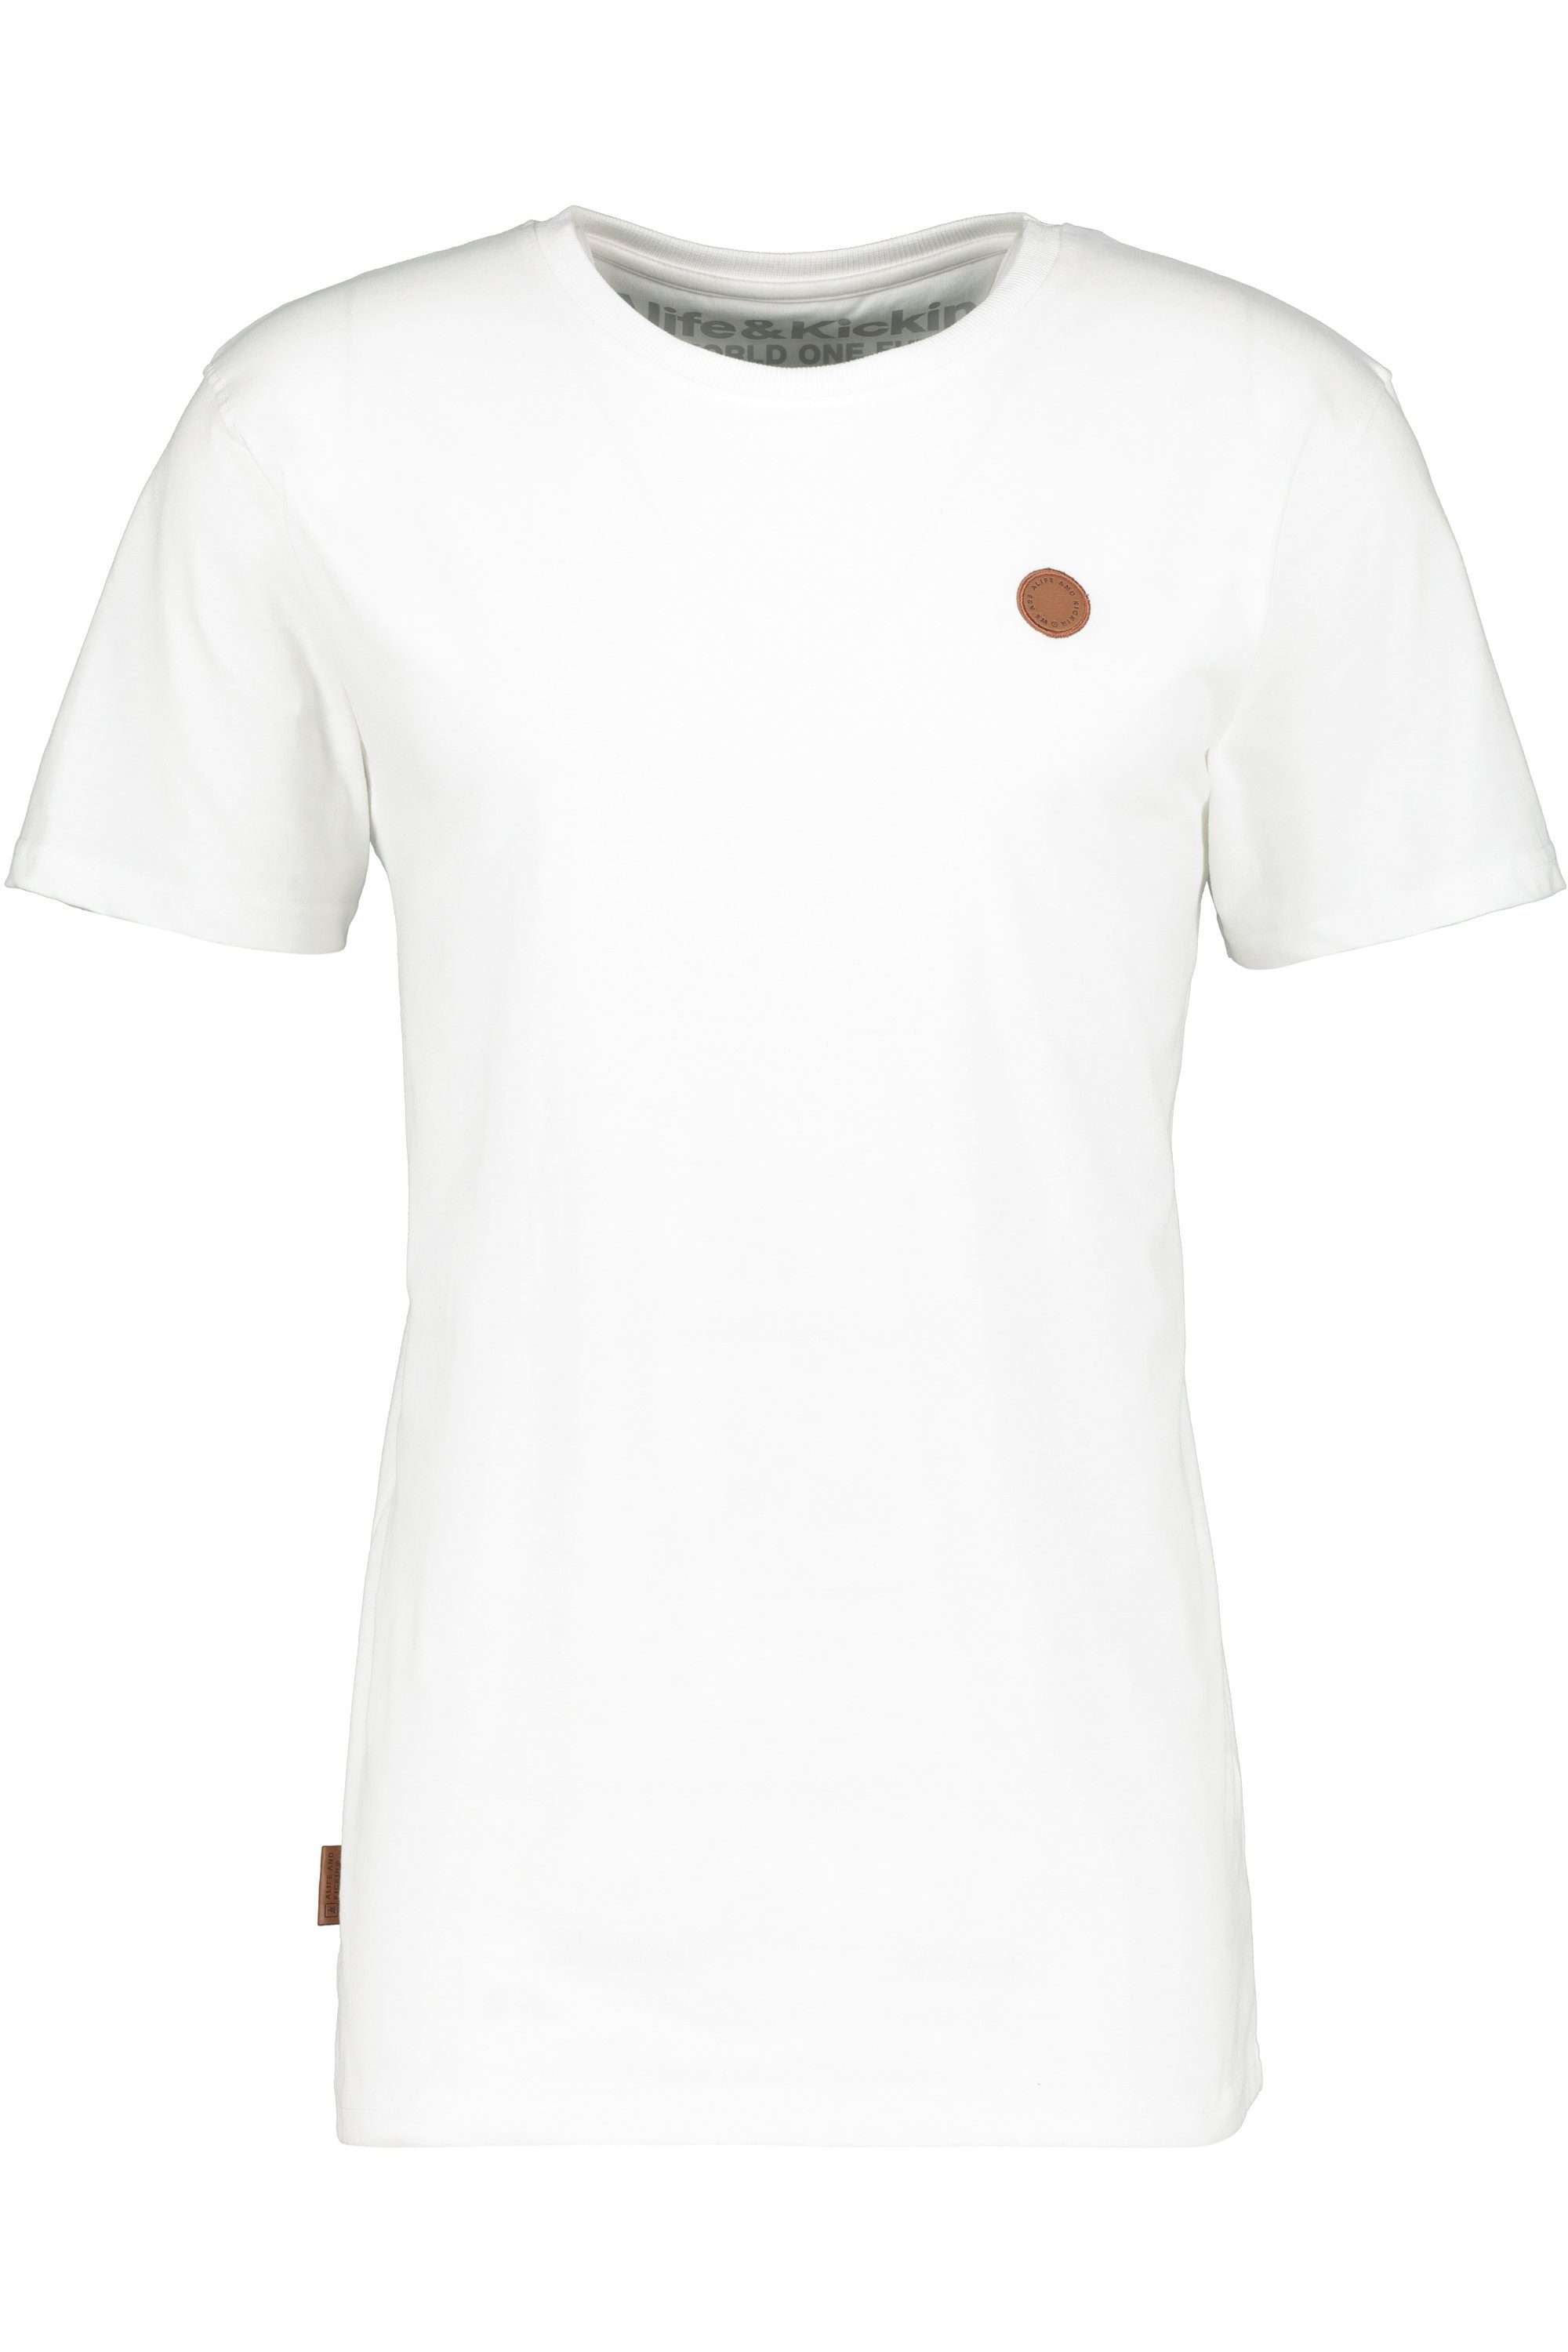 Alife & Kickin MatsAK T-Shirt T-Shirt Herren cloudy